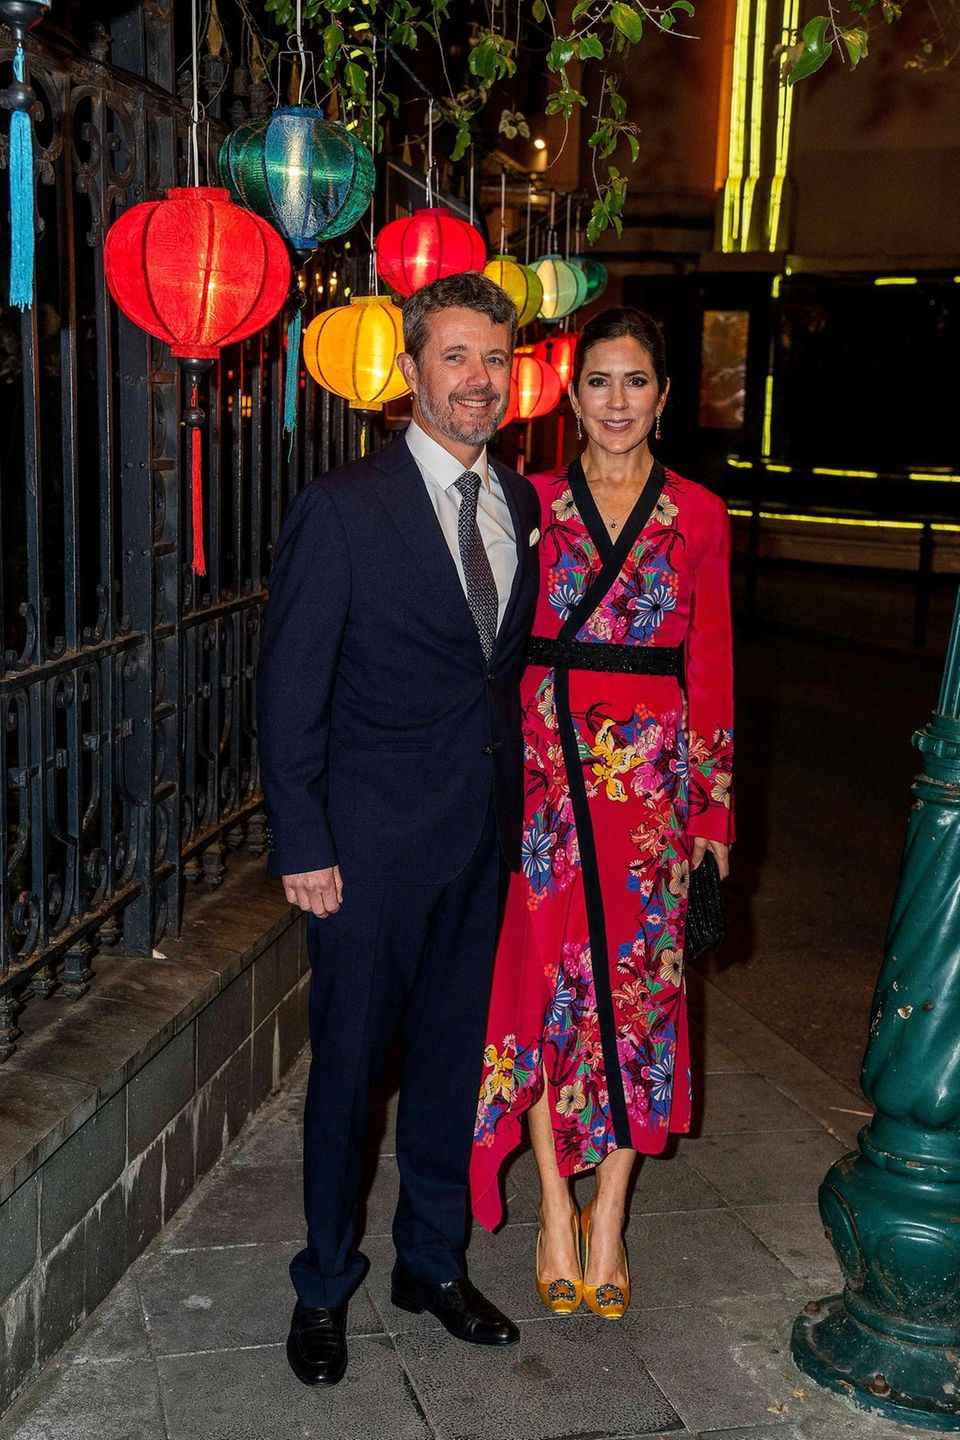 Princess Mary wears a colorful dress at the Hanoi Opera House reception. 